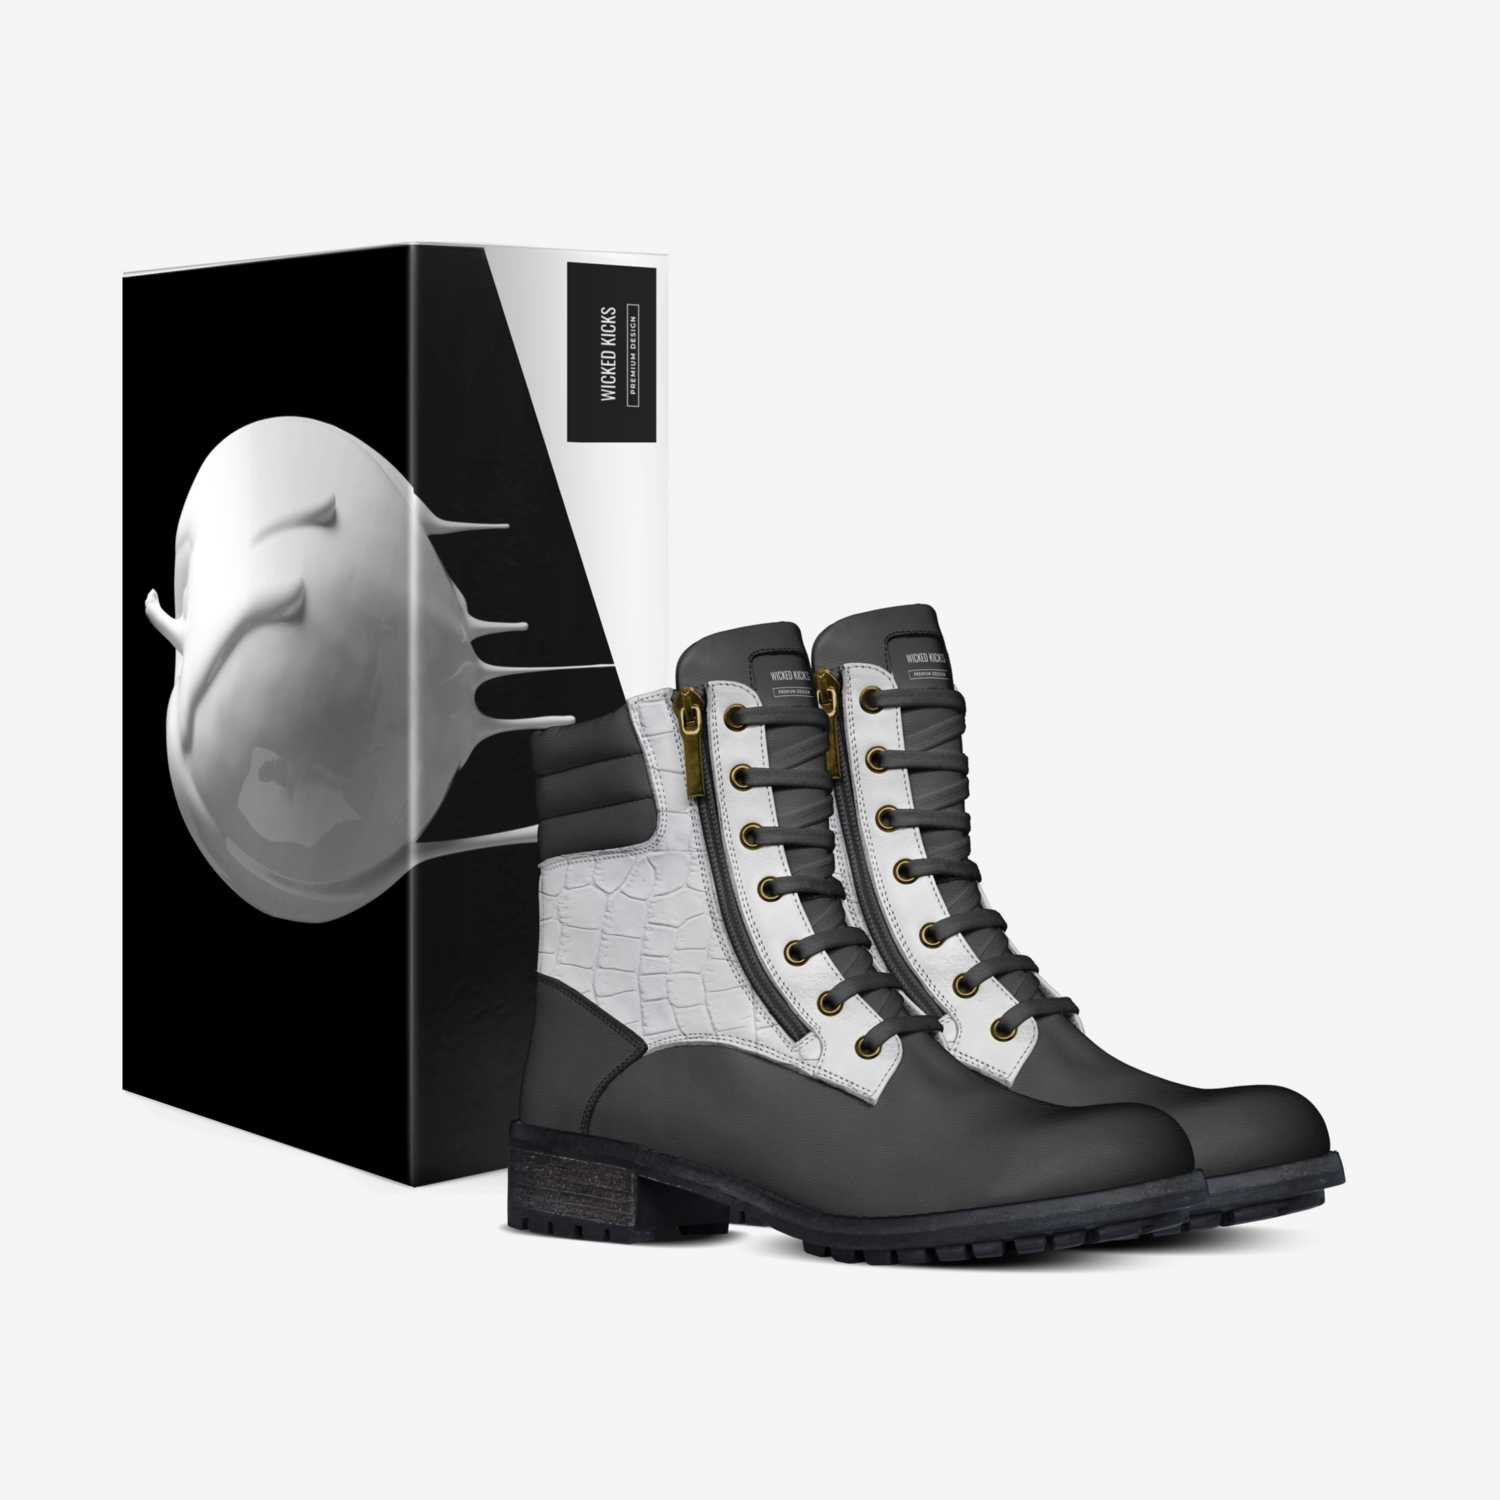 Wicked Kicks custom made in Italy shoes by Jacks B | Box view